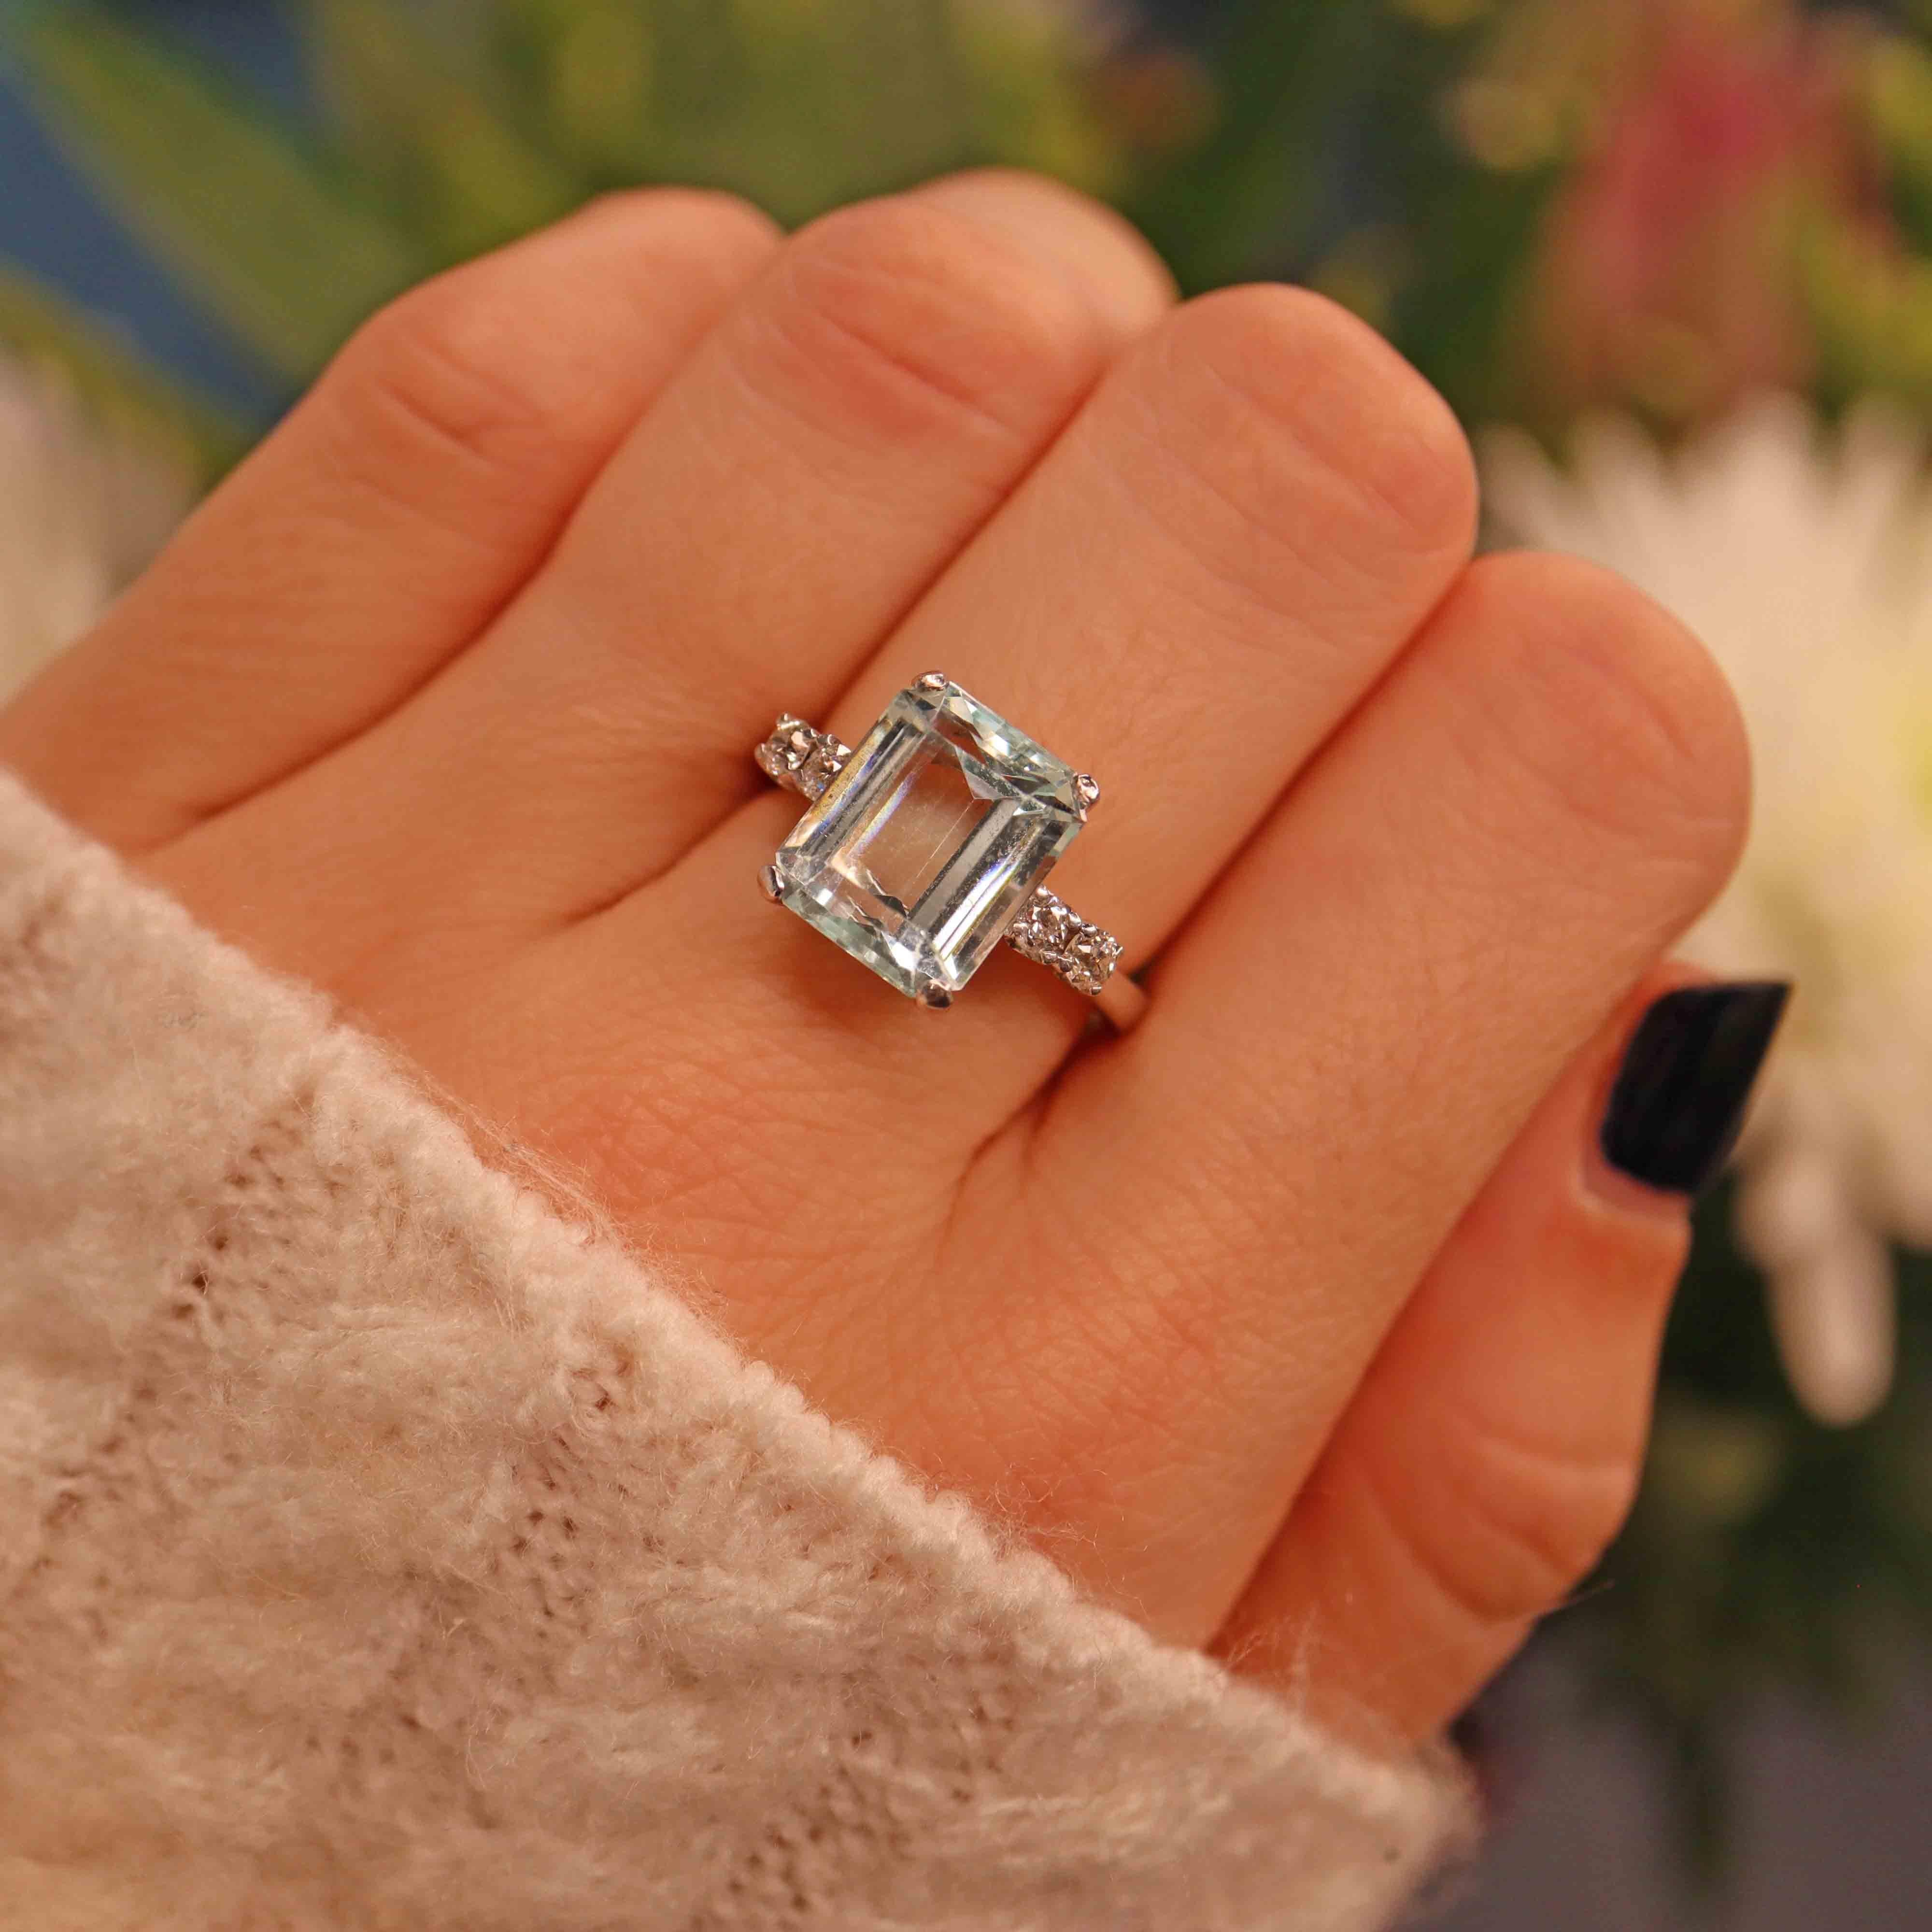 Ellibelle Jewellery Aquamarine & Diamond 18ct White Gold Ring